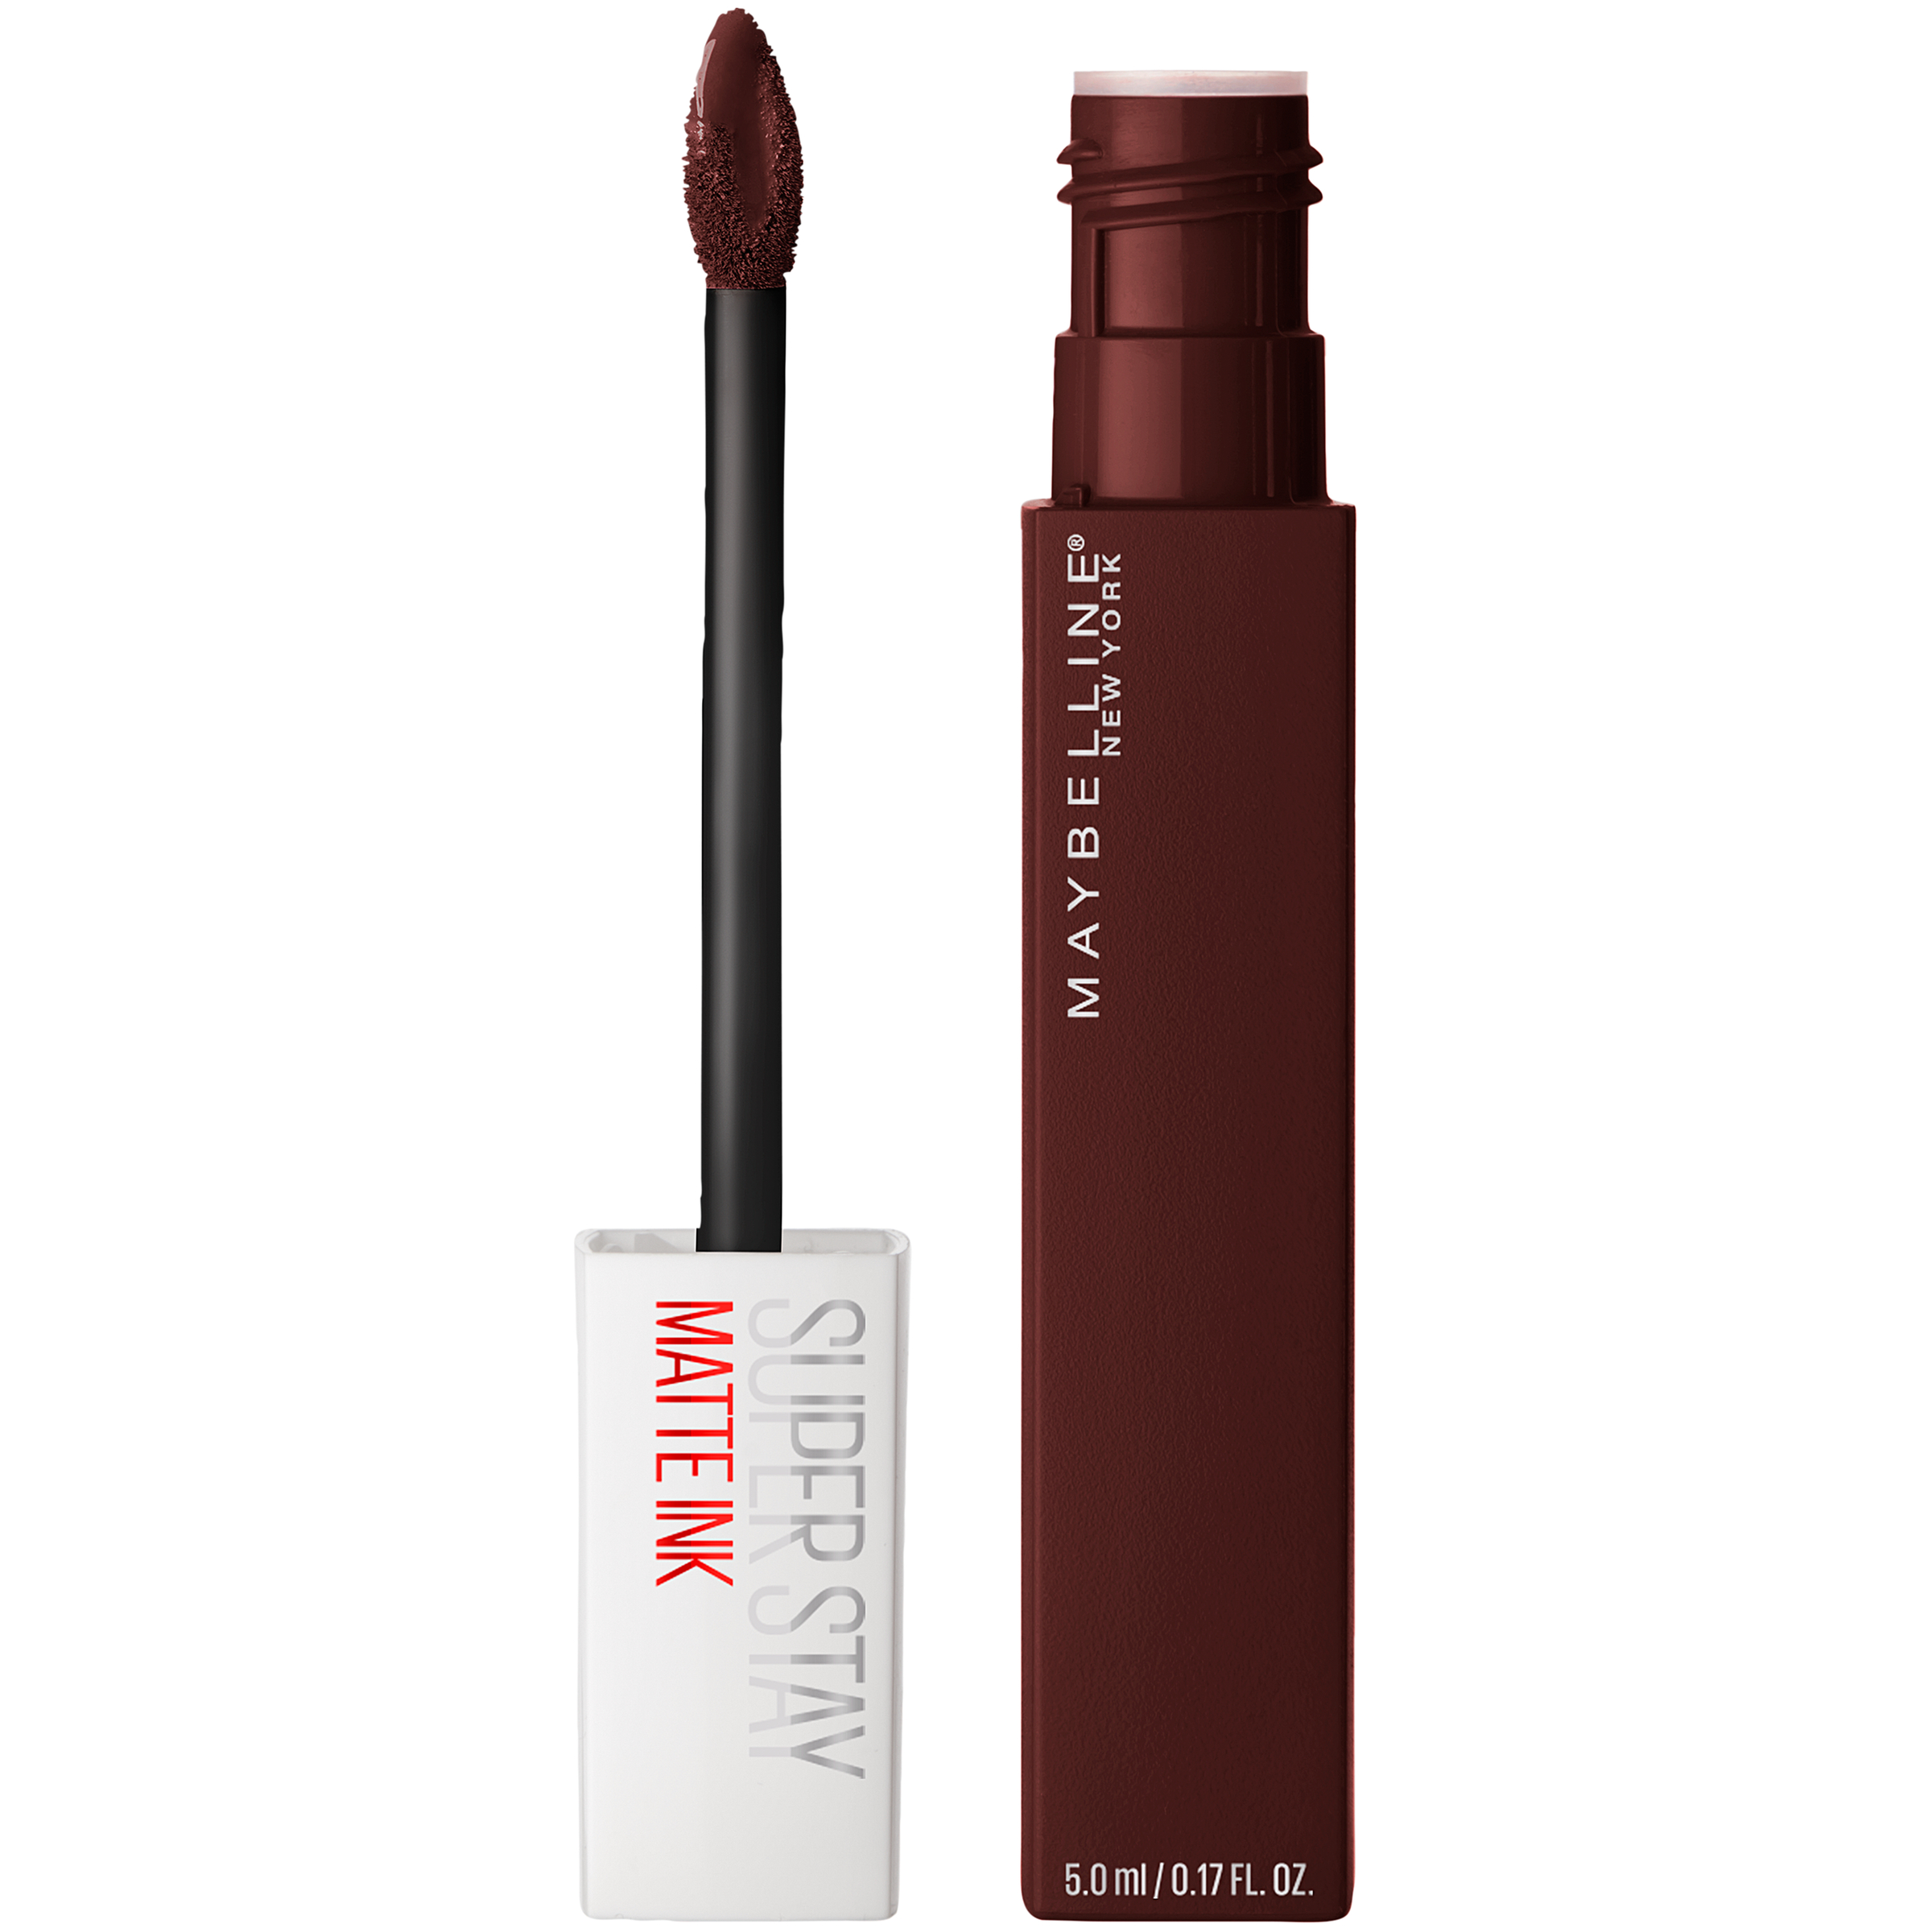 Maybelline SuperStay Matte Ink Un-nude Liquid Lipstick, Protector, 0.17 fl. oz.